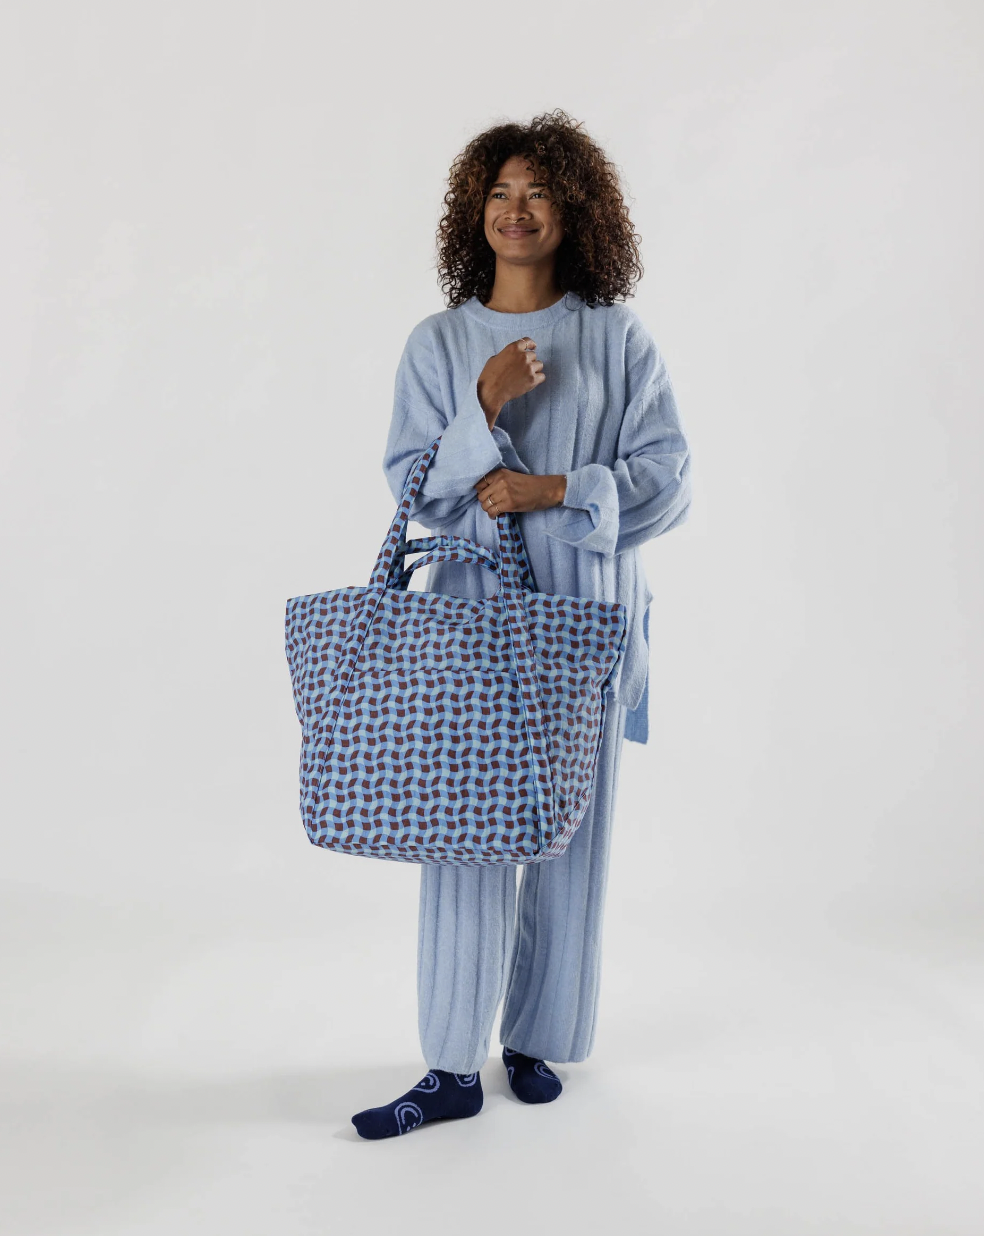 Mini Frances Bag in Cool Cornflower Blue - Women